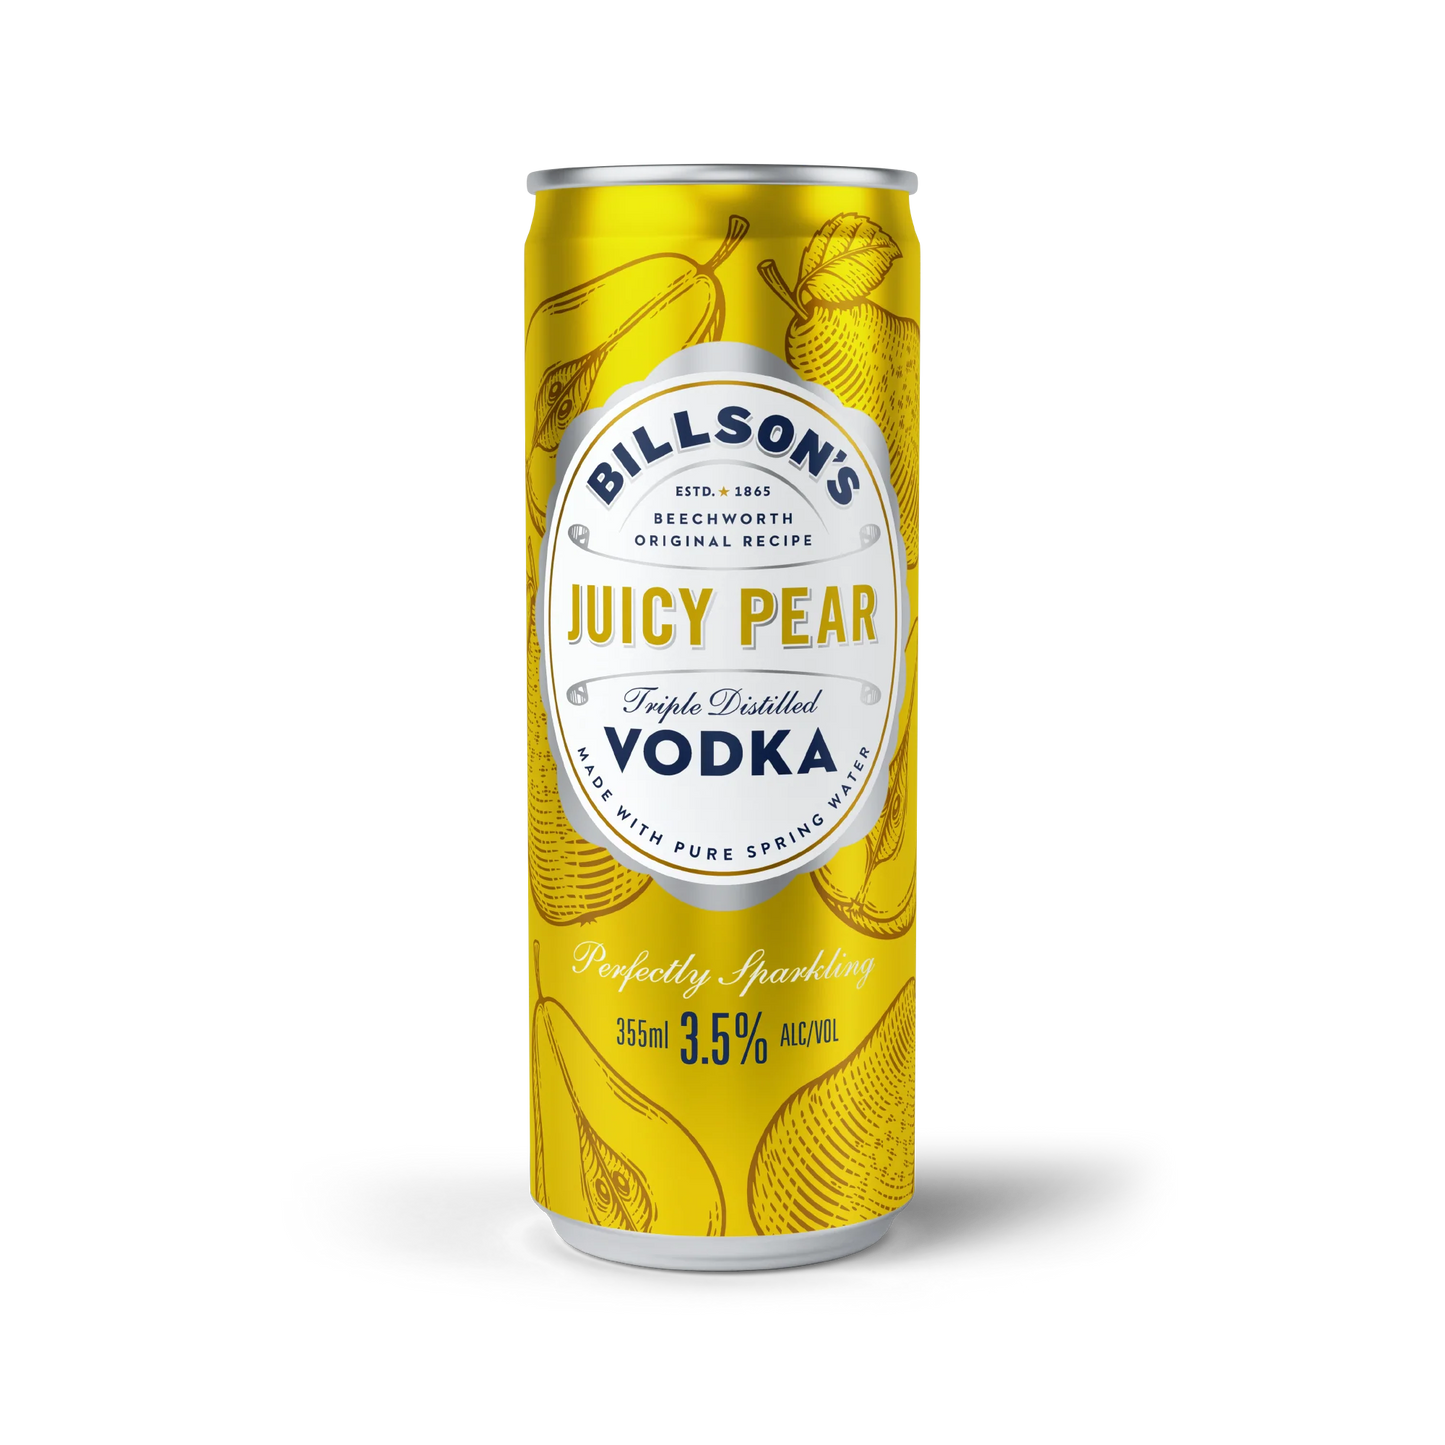 Billson's Vodka Juicy Pear 355ml